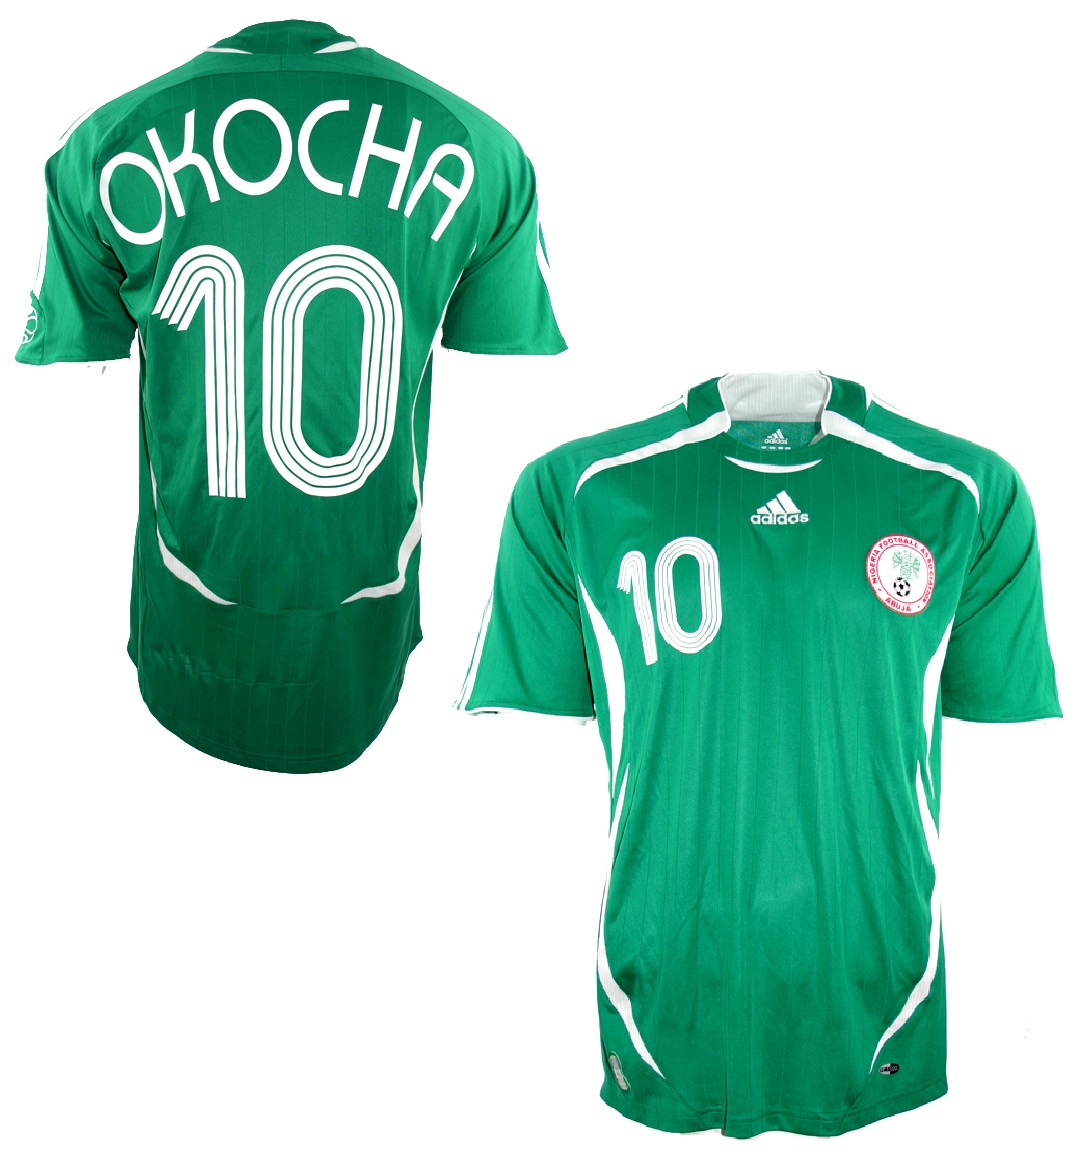 nigeria old jersey